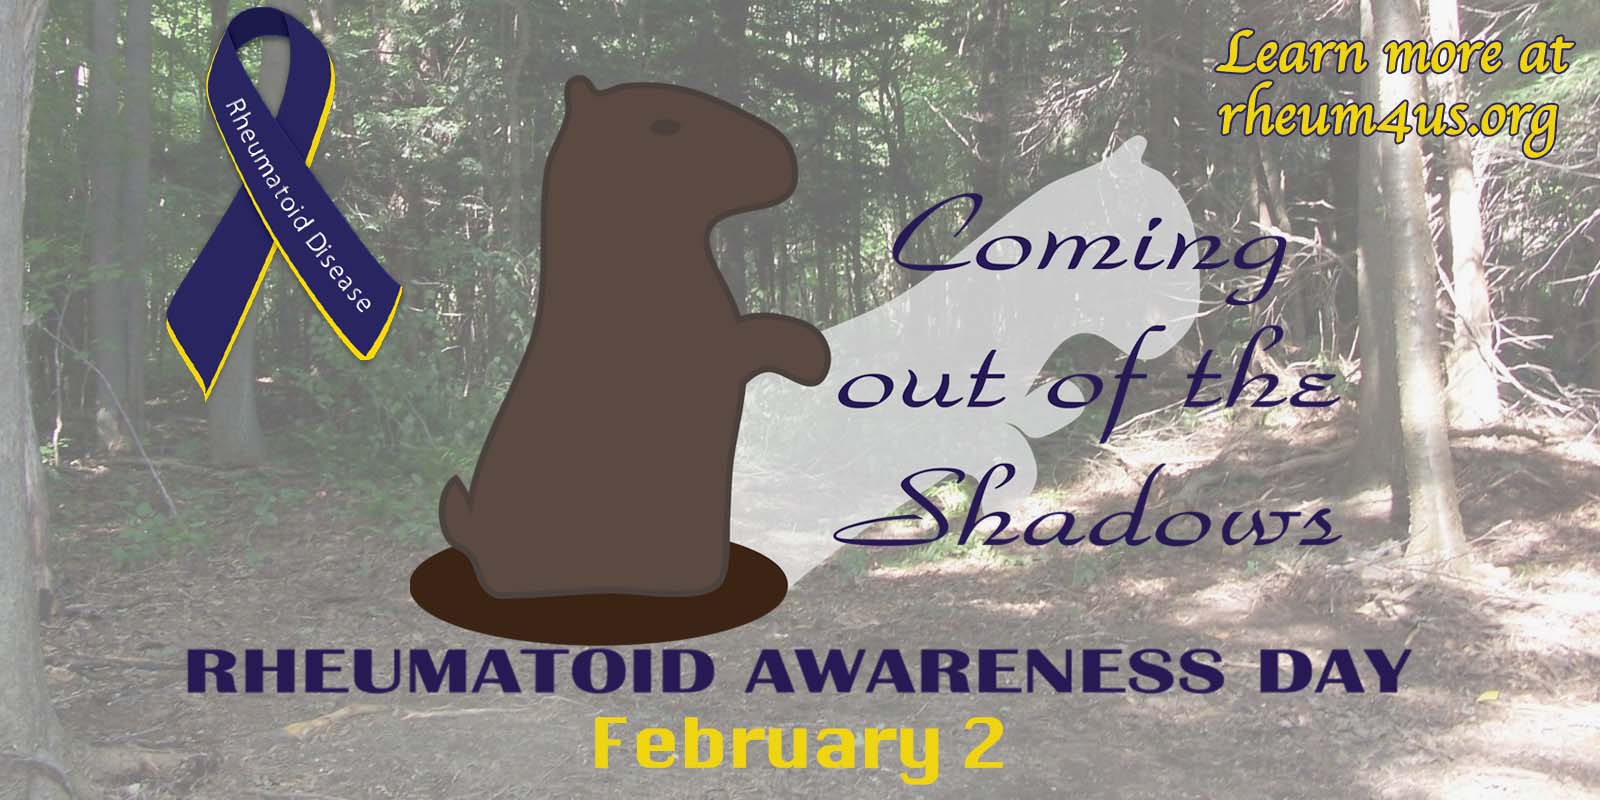 Rheumatoid Disease Awareness Day groundhog